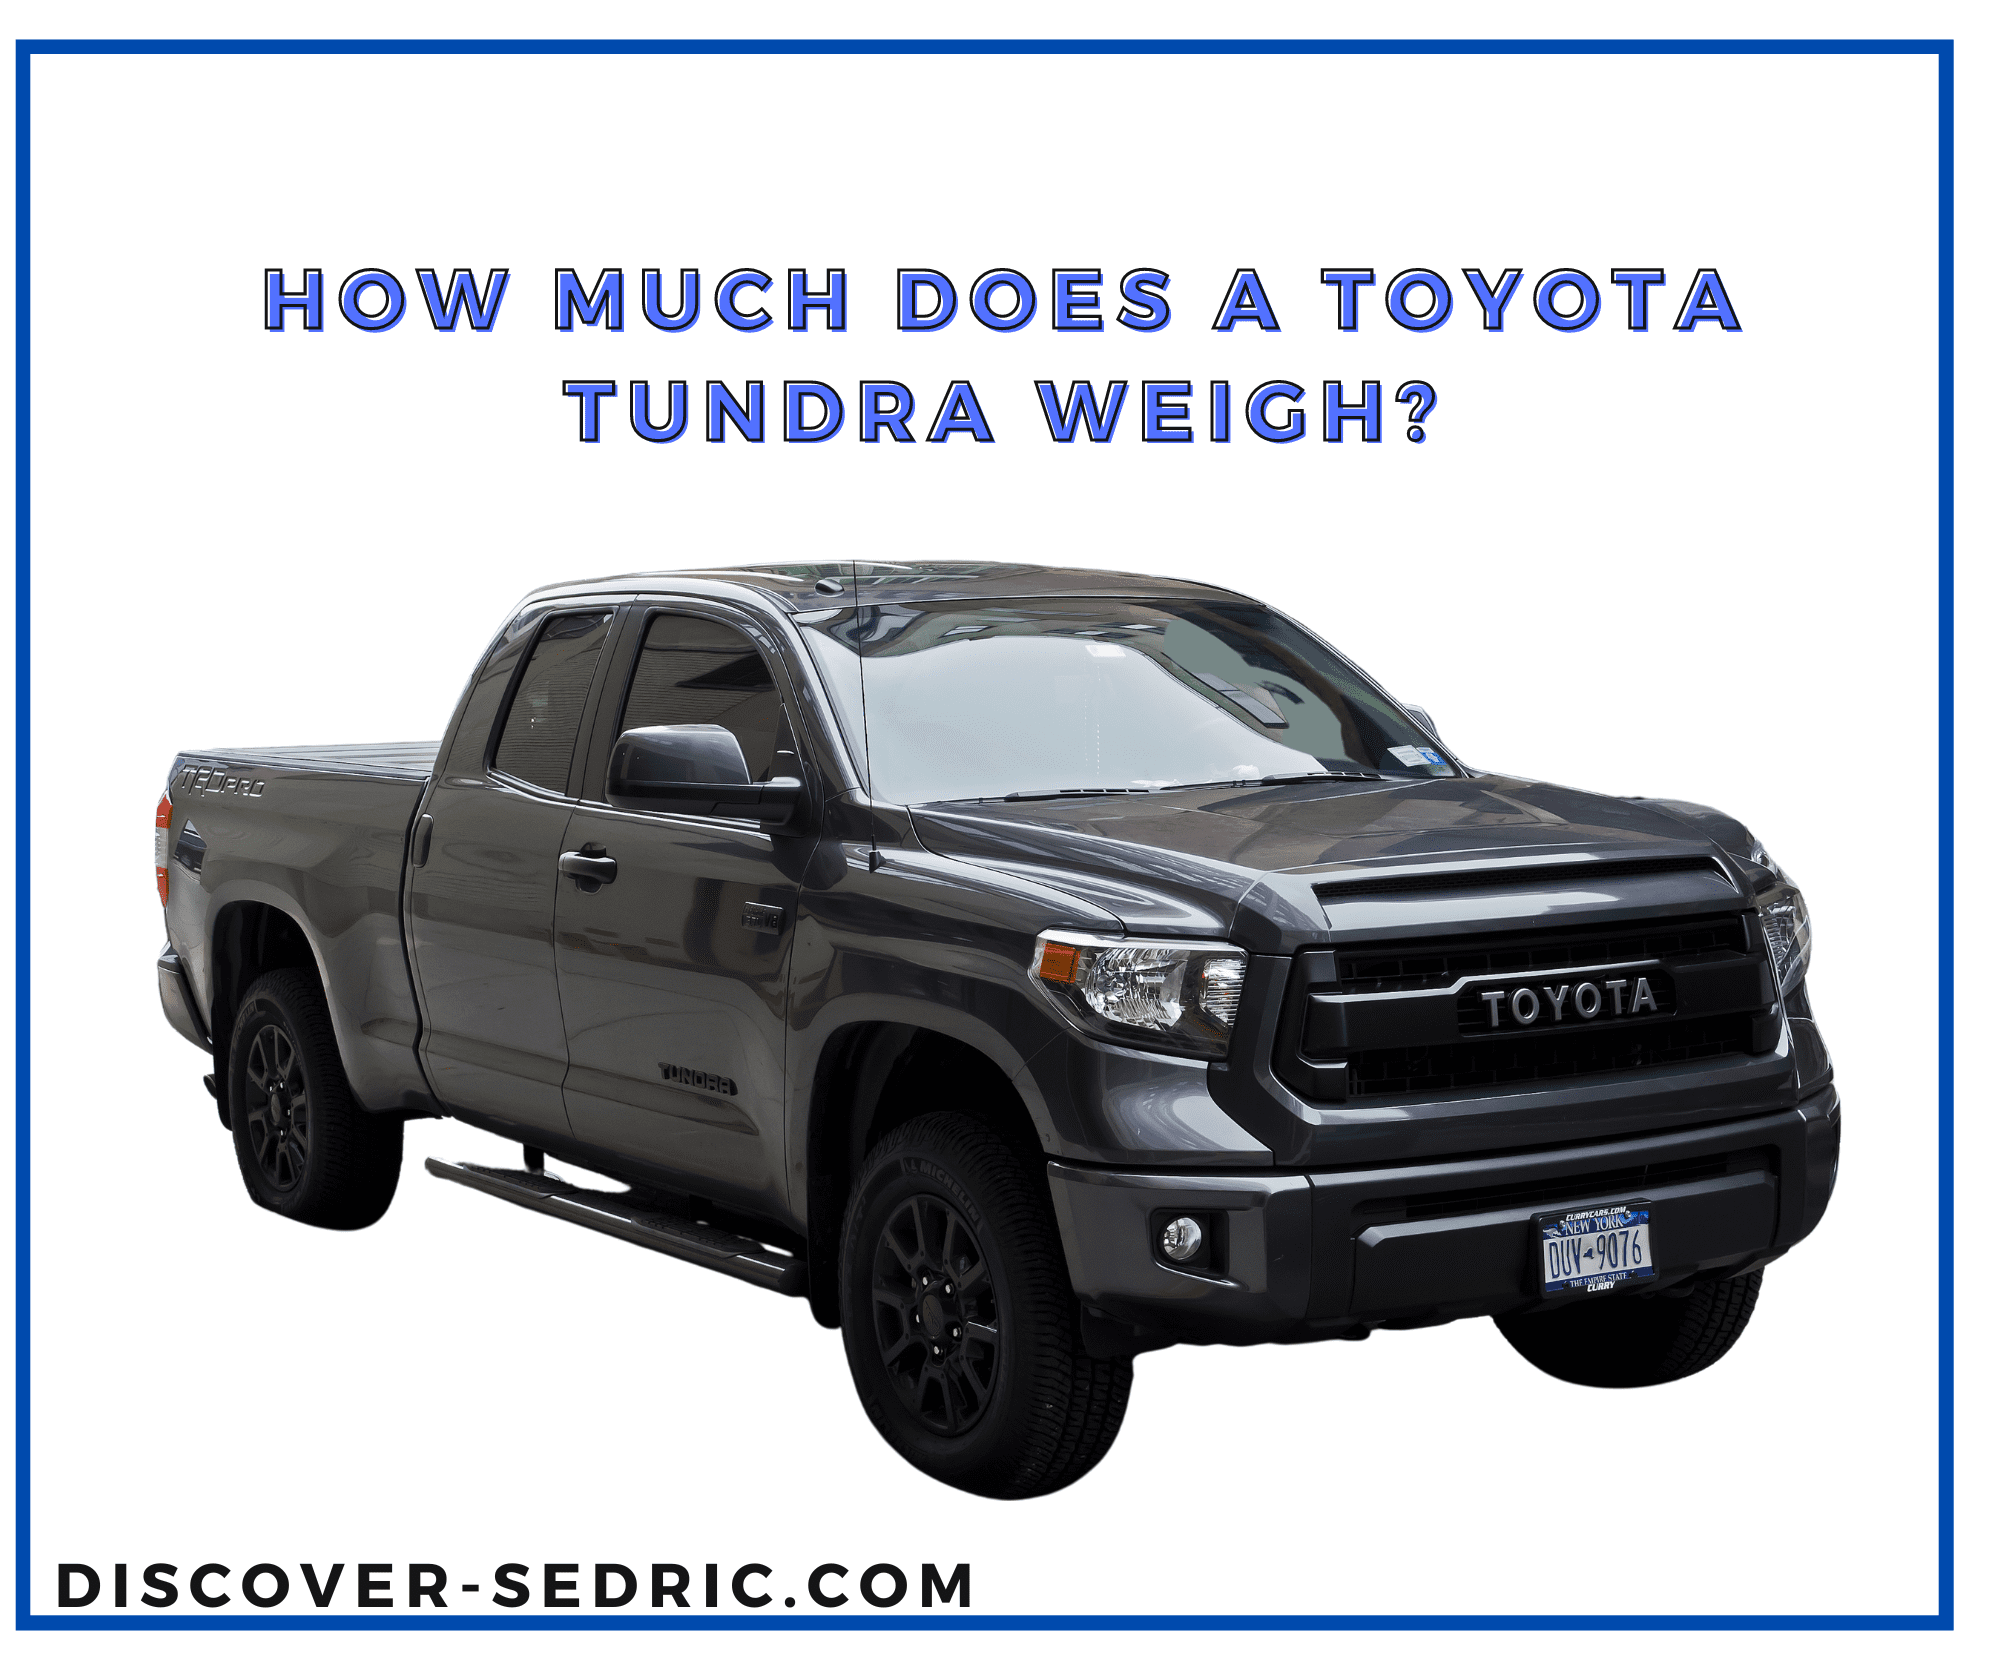 Toyota Tundra weigh